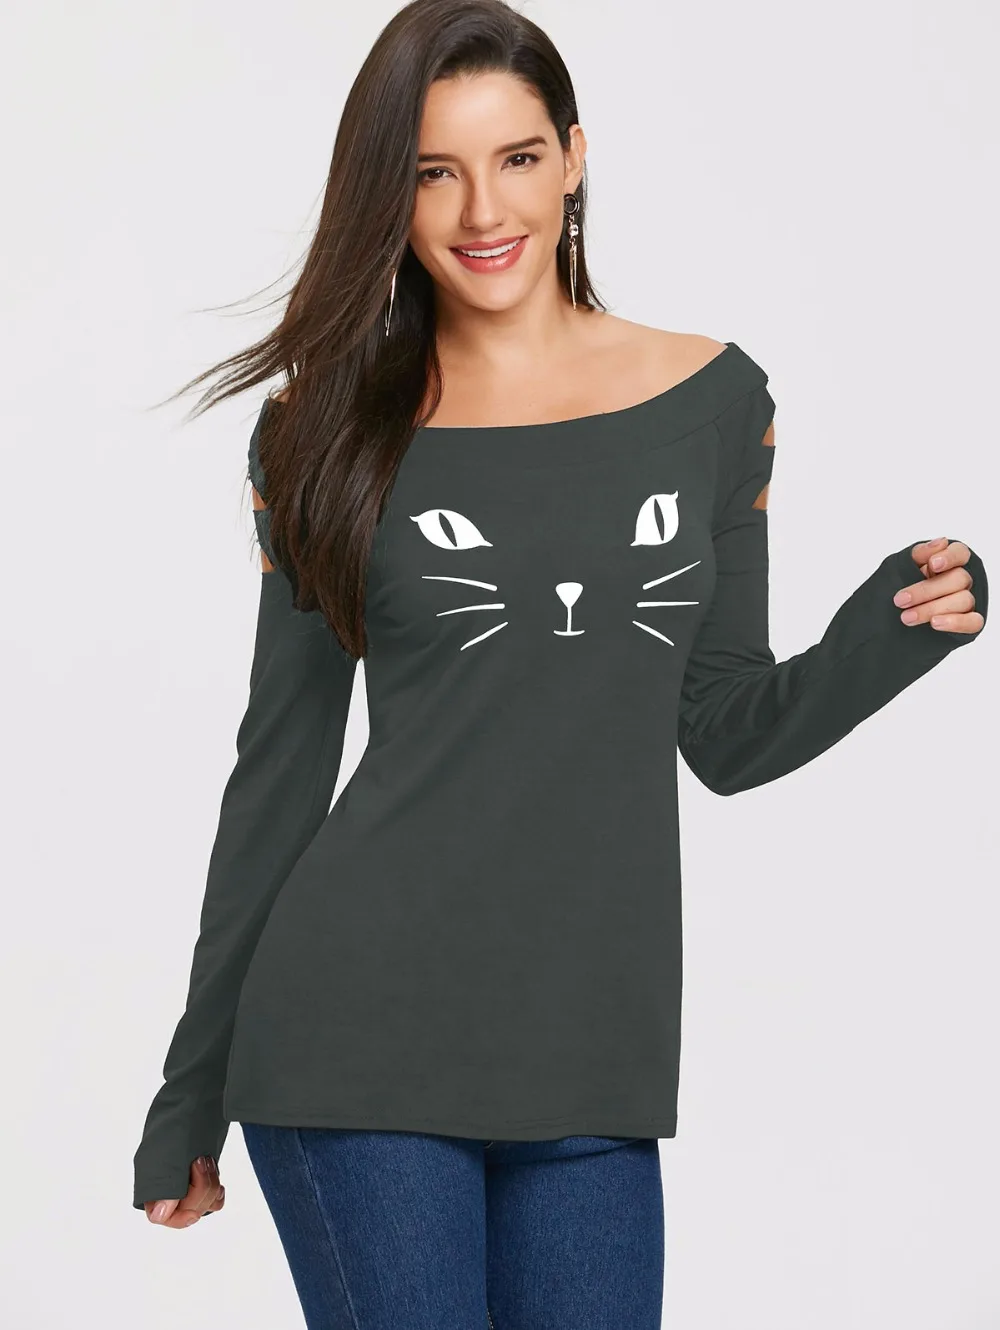 VESTLINDA Women T Shirts Casual Autumn Cat Clothes Womens Tops Cat Face Print Long Sleeve Ripped T-Shirt Women's Clothing Tshirt 19